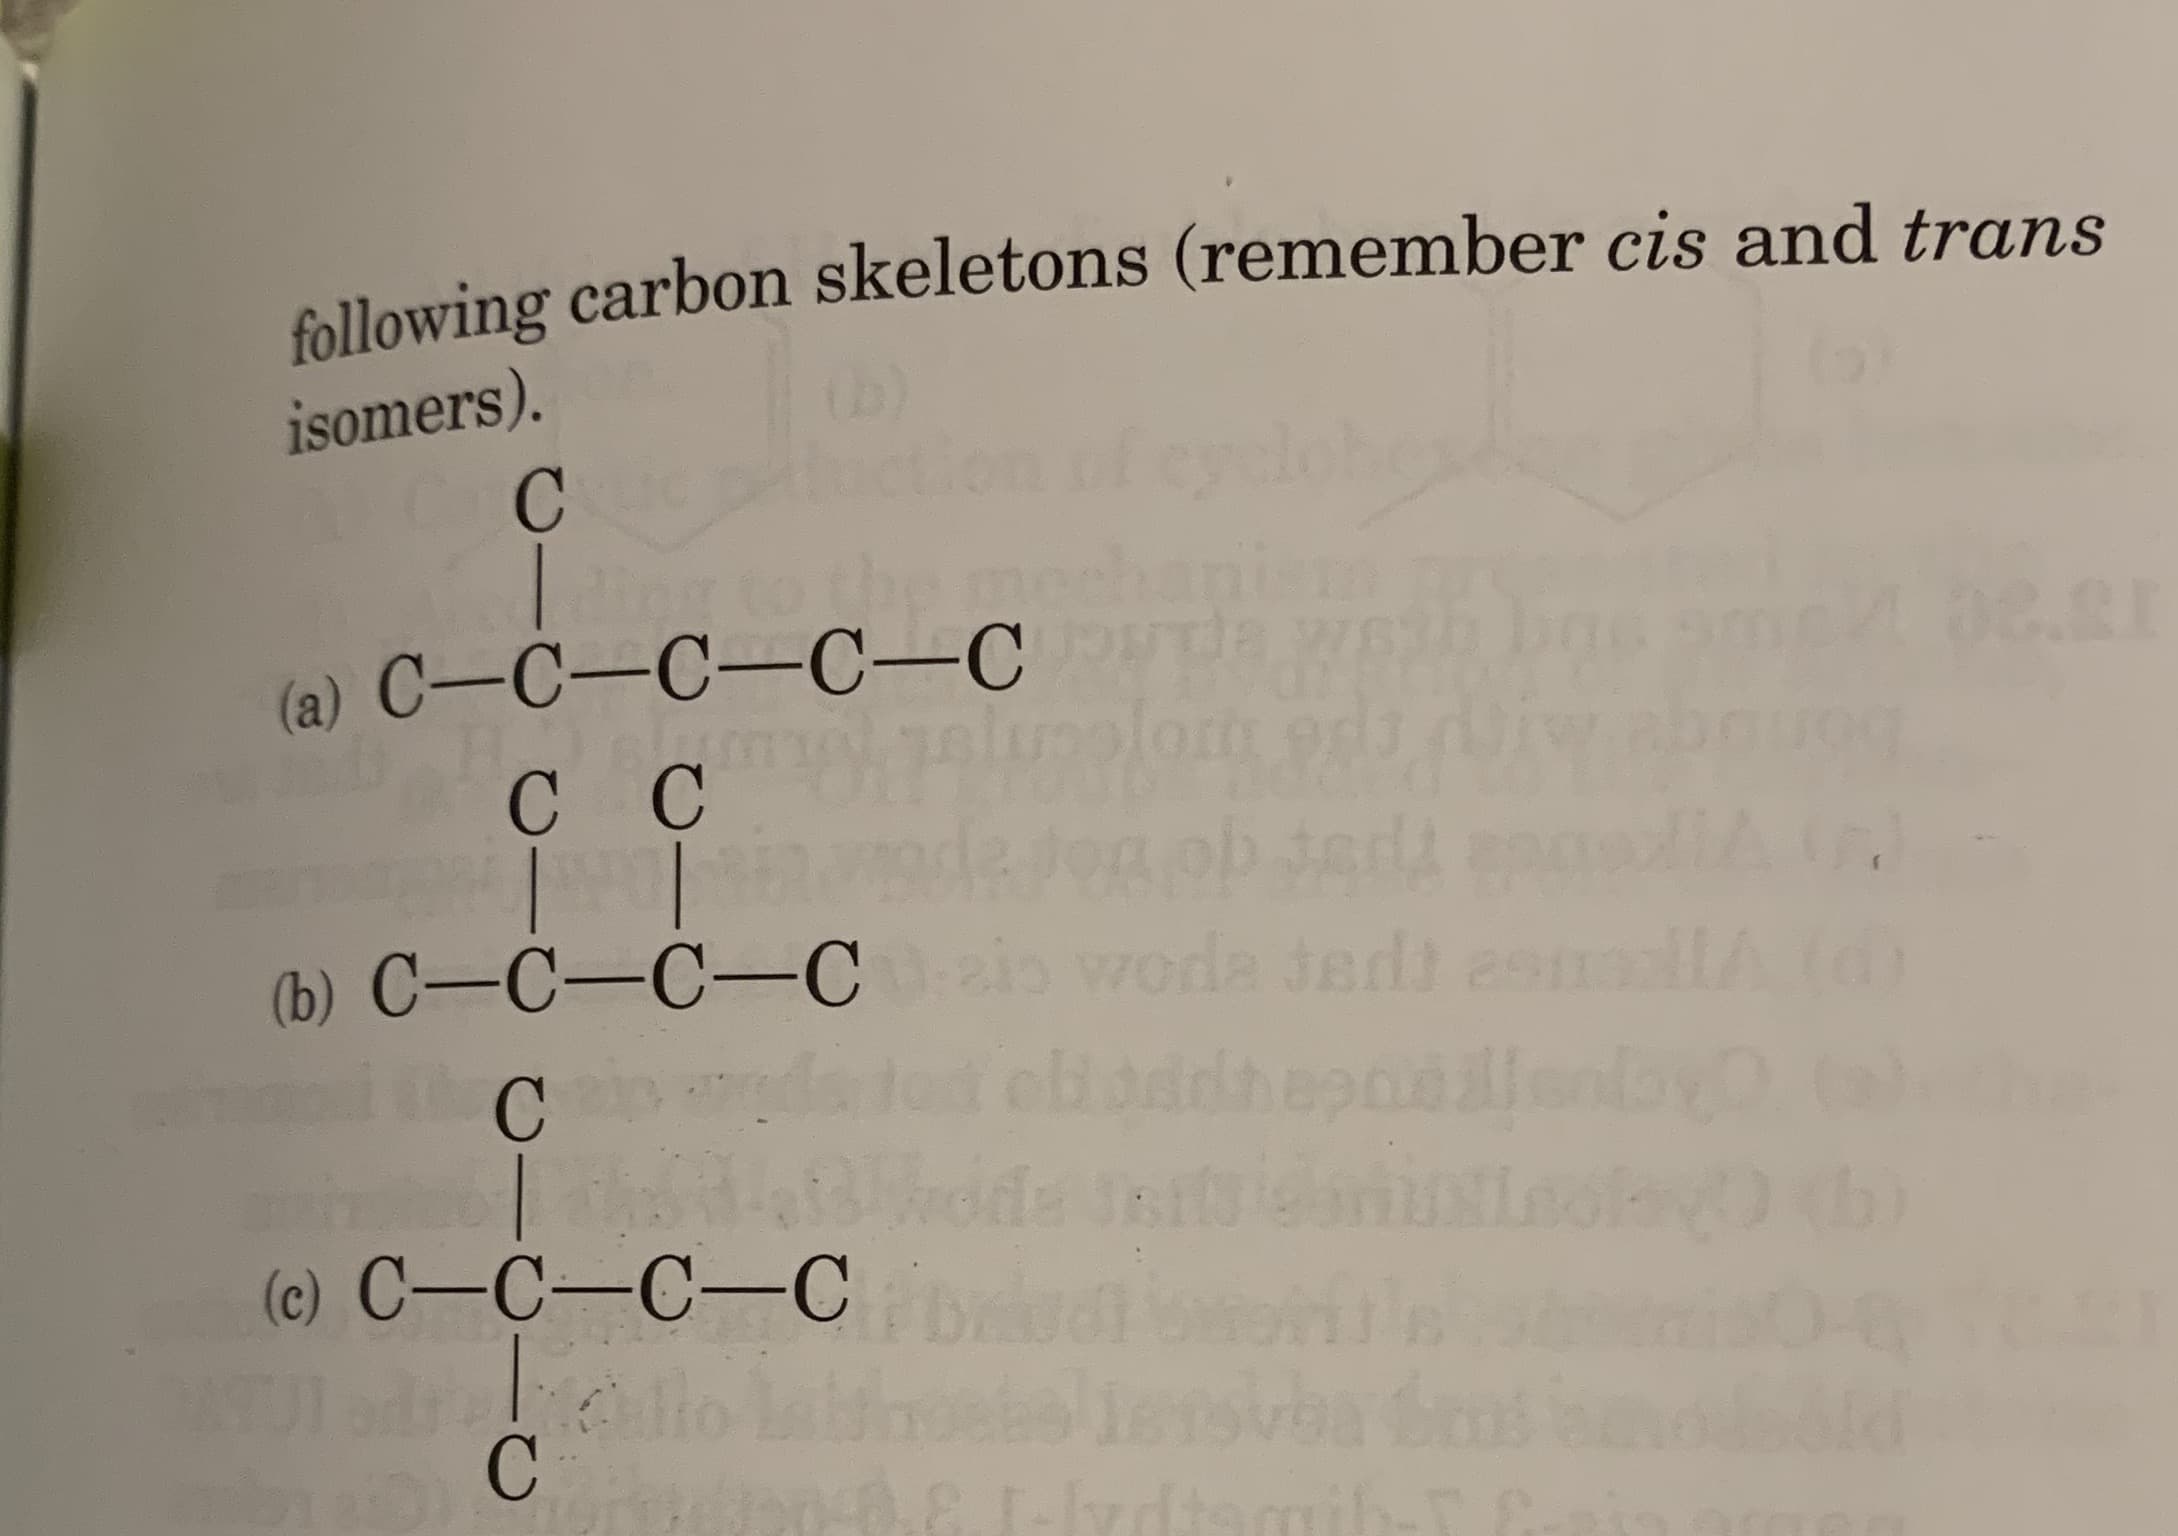 following carbon skeletons (remember cis and trans
isomers).
(a) C-C-C-C-C as
(b) C-C-C-C
woda Jedi as
(c) C-C-C-C
rdtamib-r
